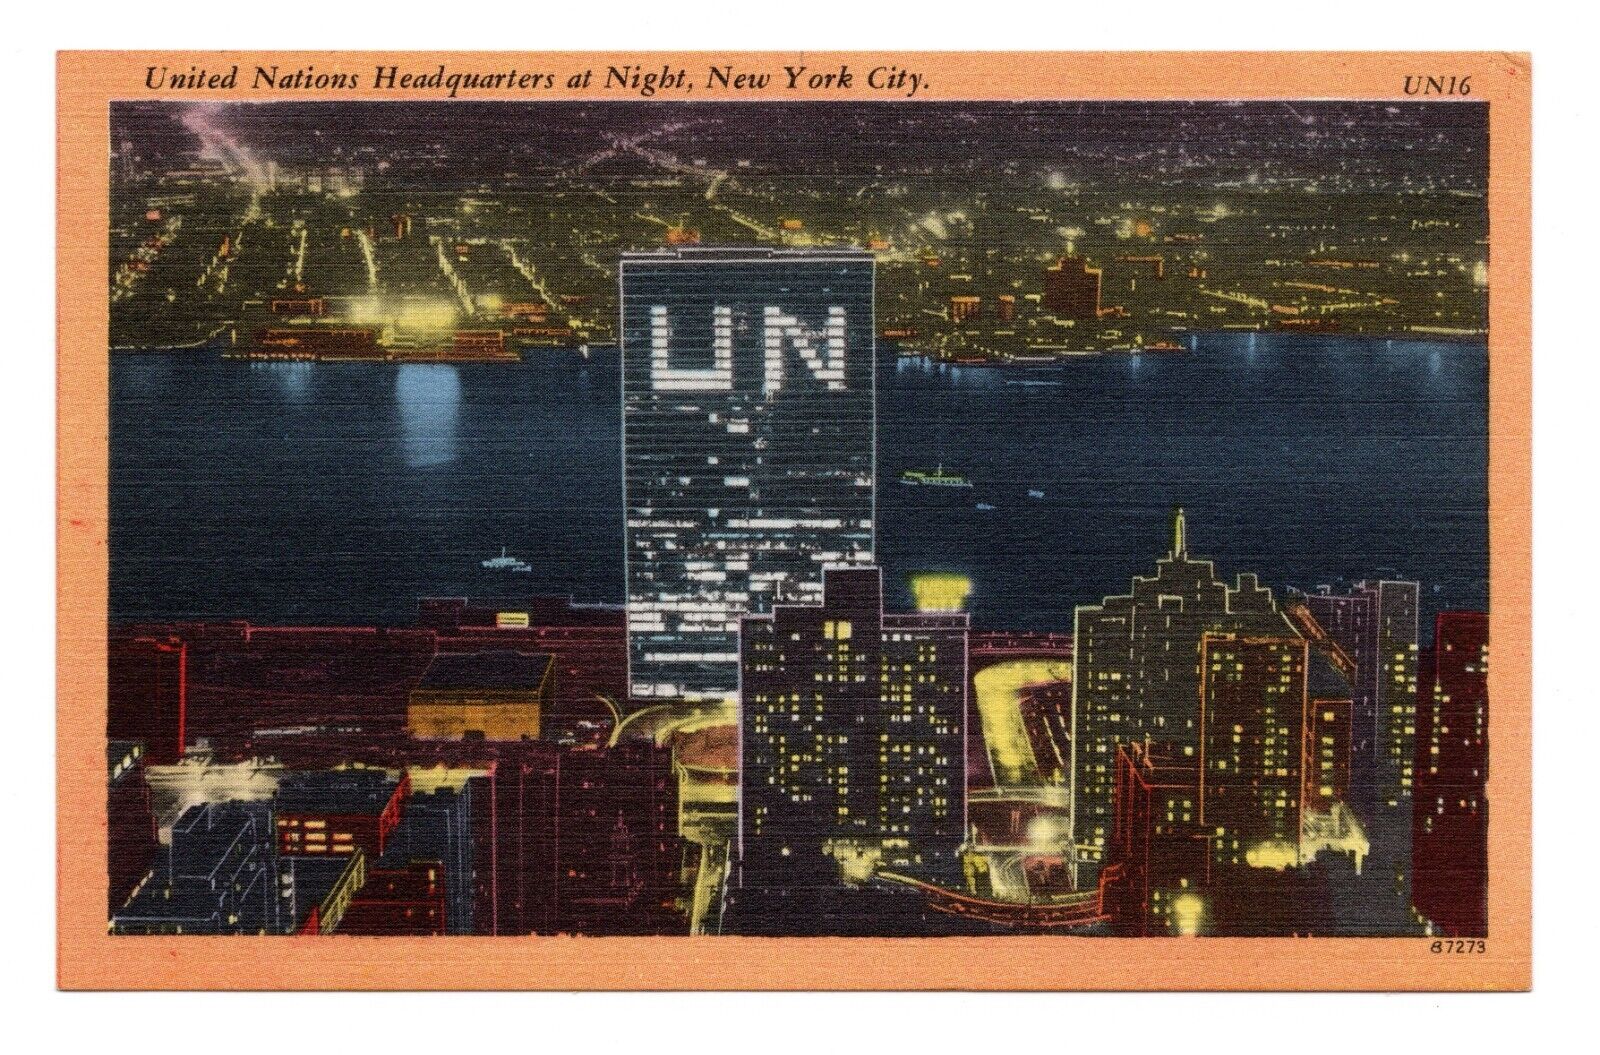 United Nations Headquarters at Night, New York City, Linen Postcard, UN16